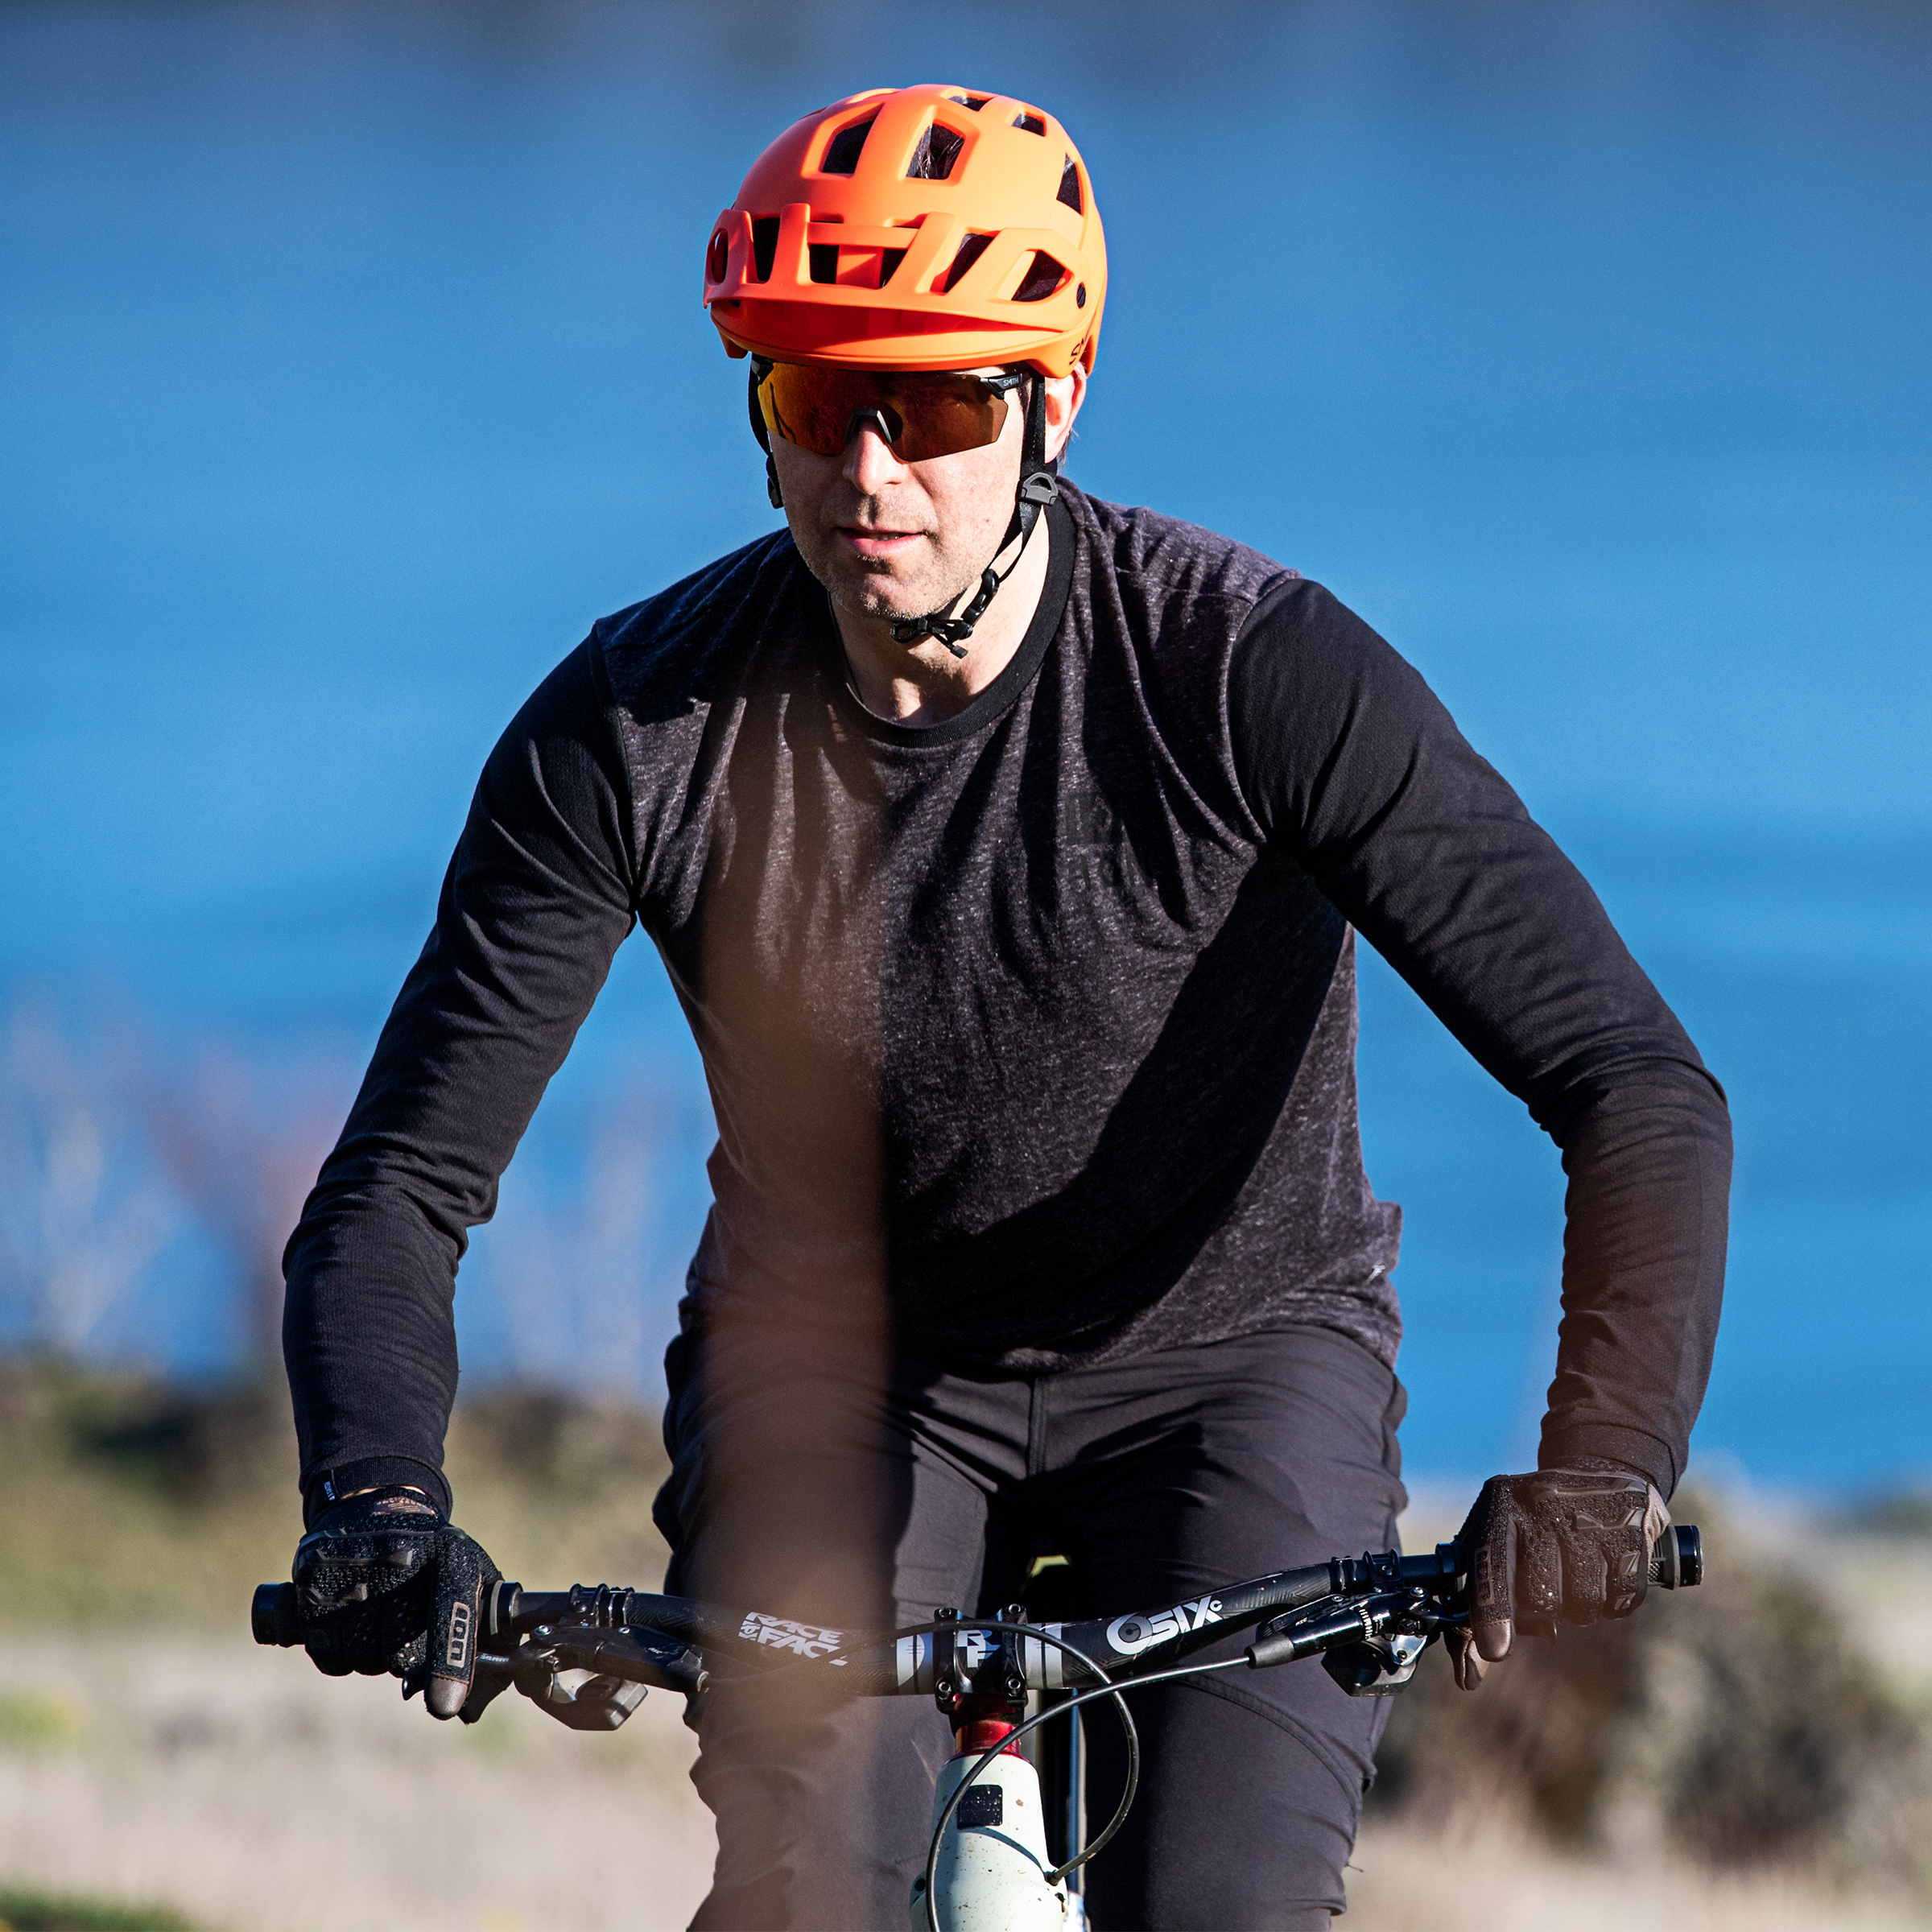 Smith Engage MIPS Mountain Bike Helmet